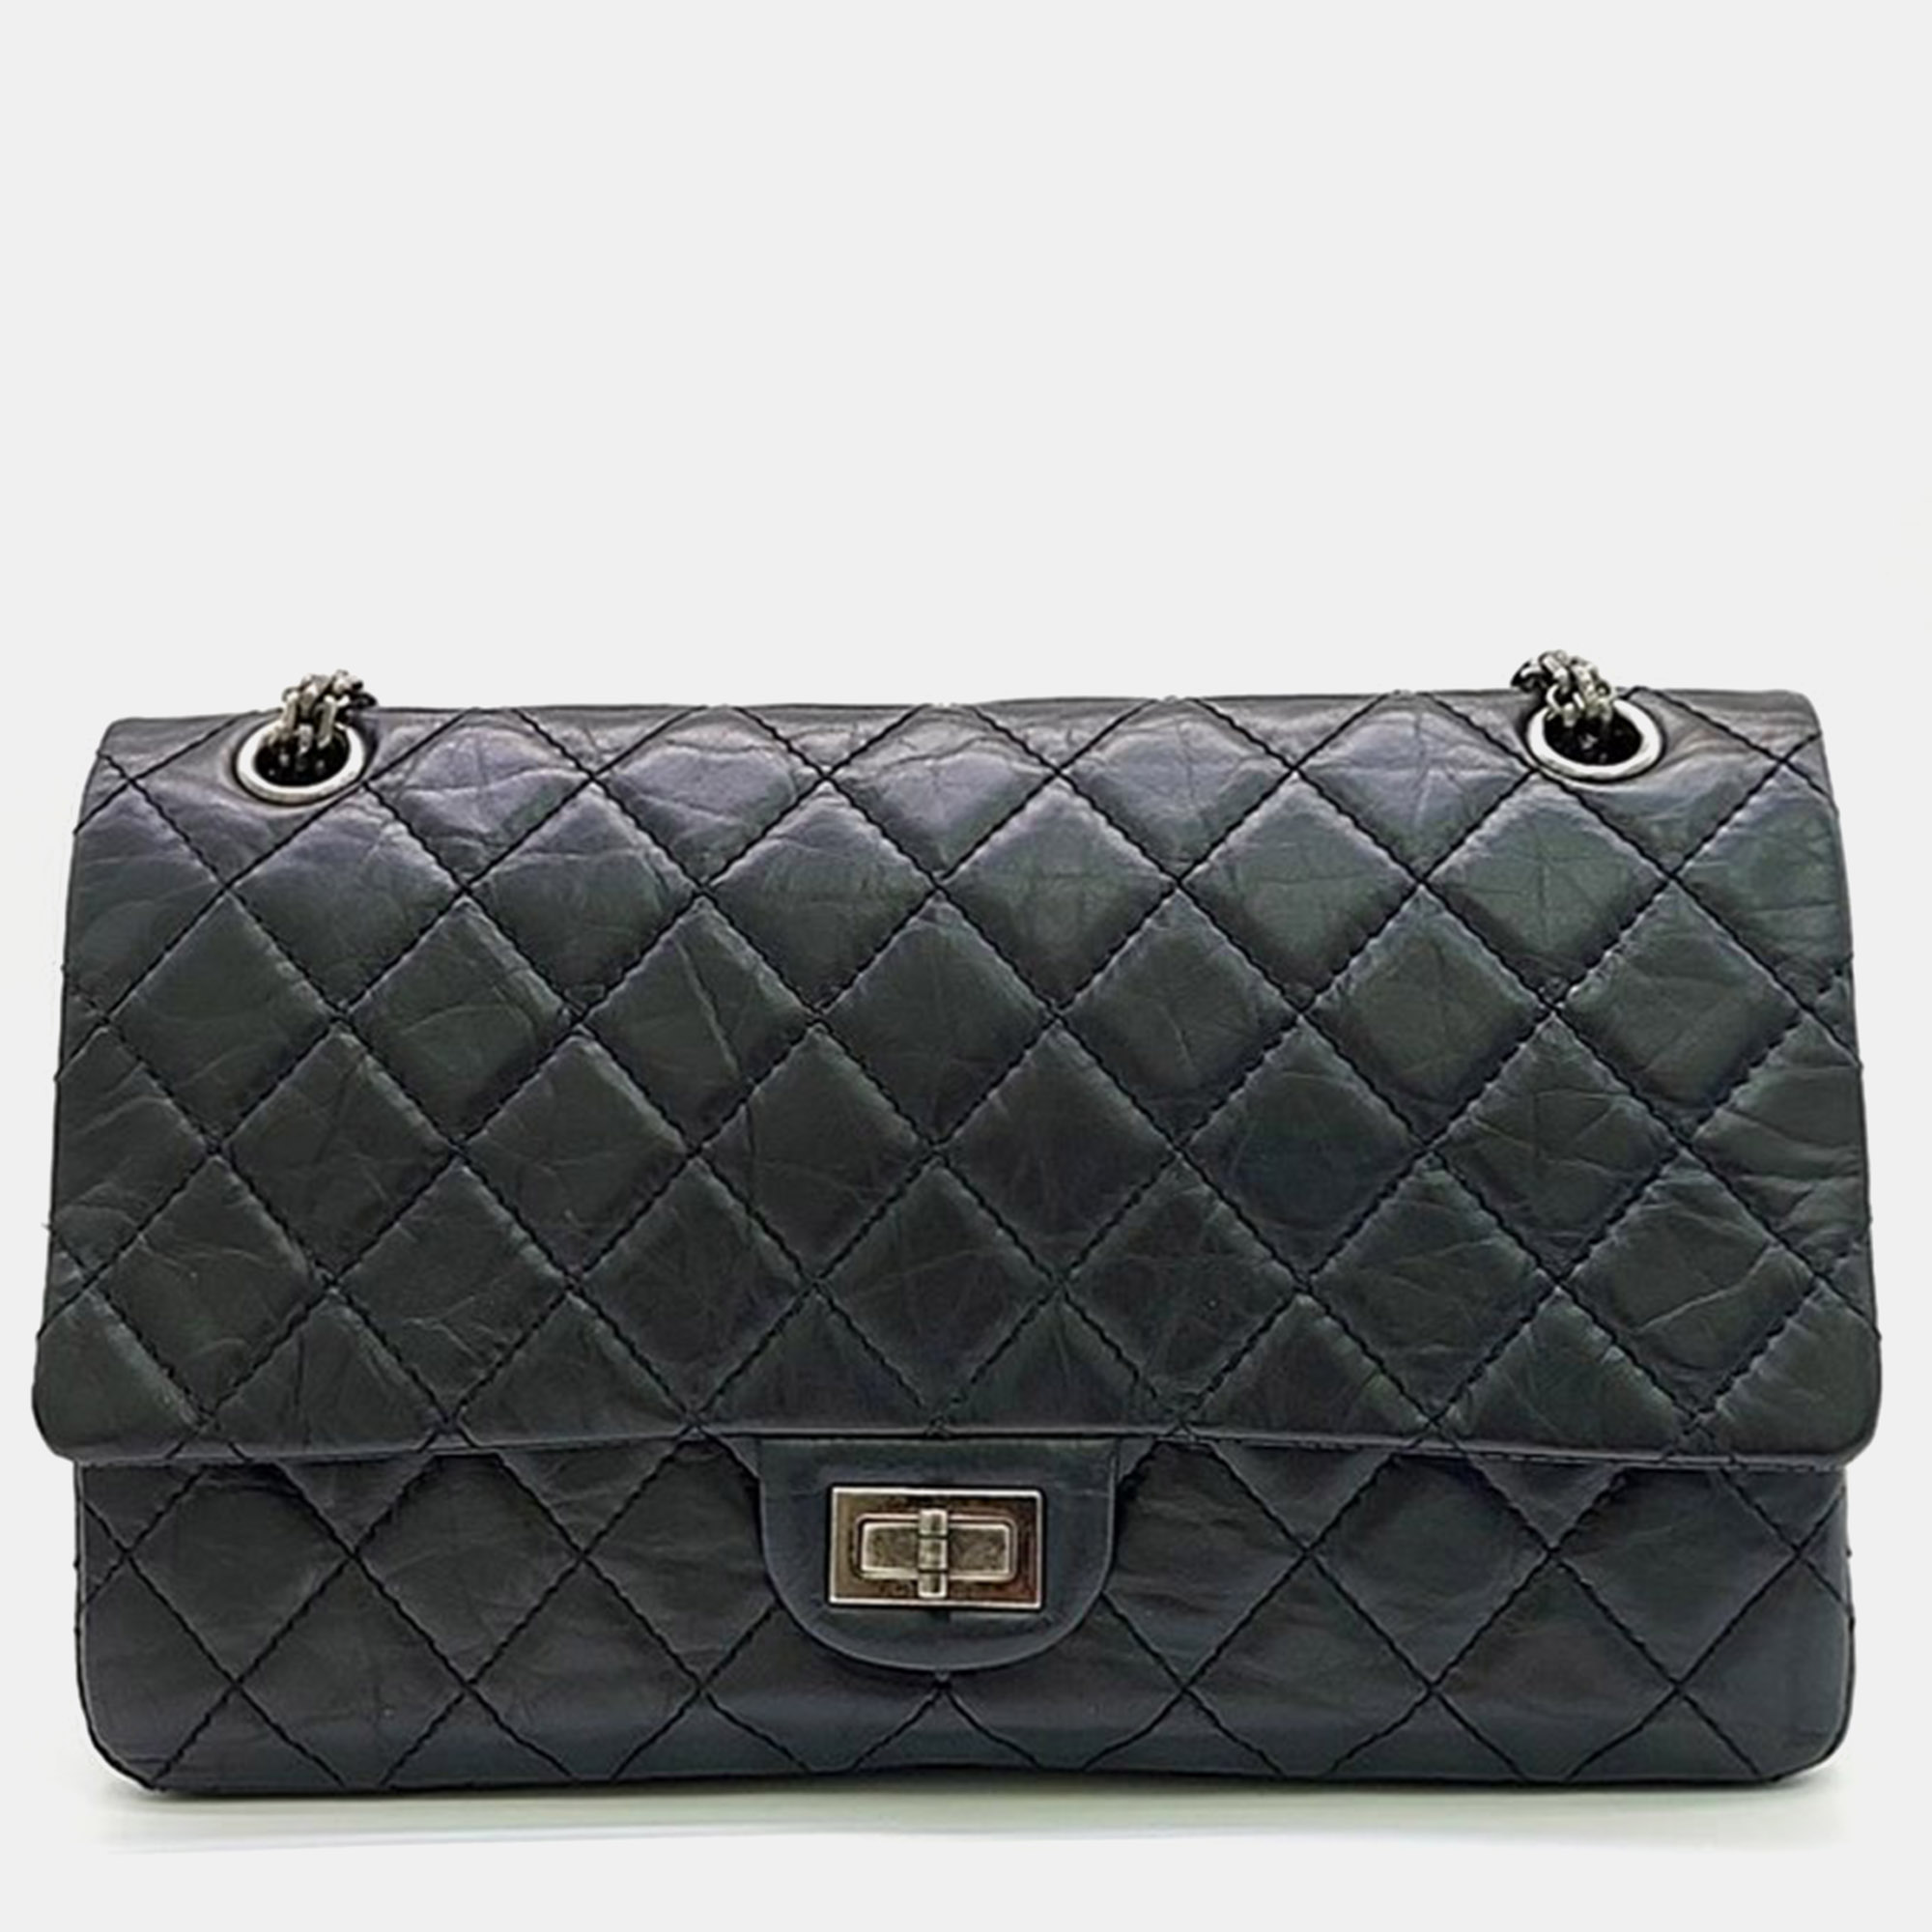 Chanel vintage 2.55 bag 28 crossbody bag